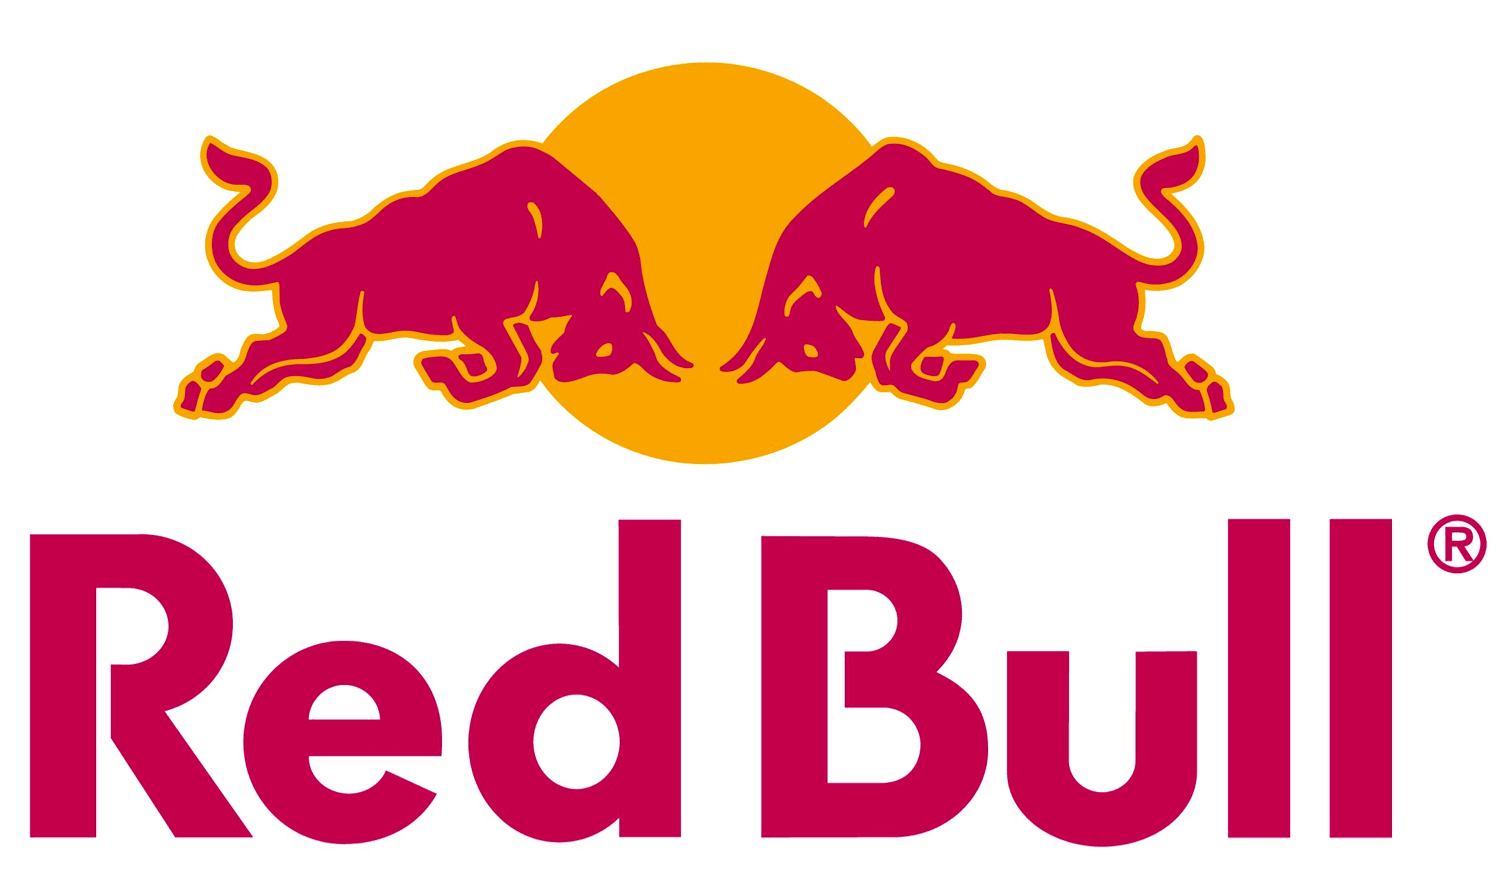 Two Bulls Logo - Red Bull News: A powerful logo